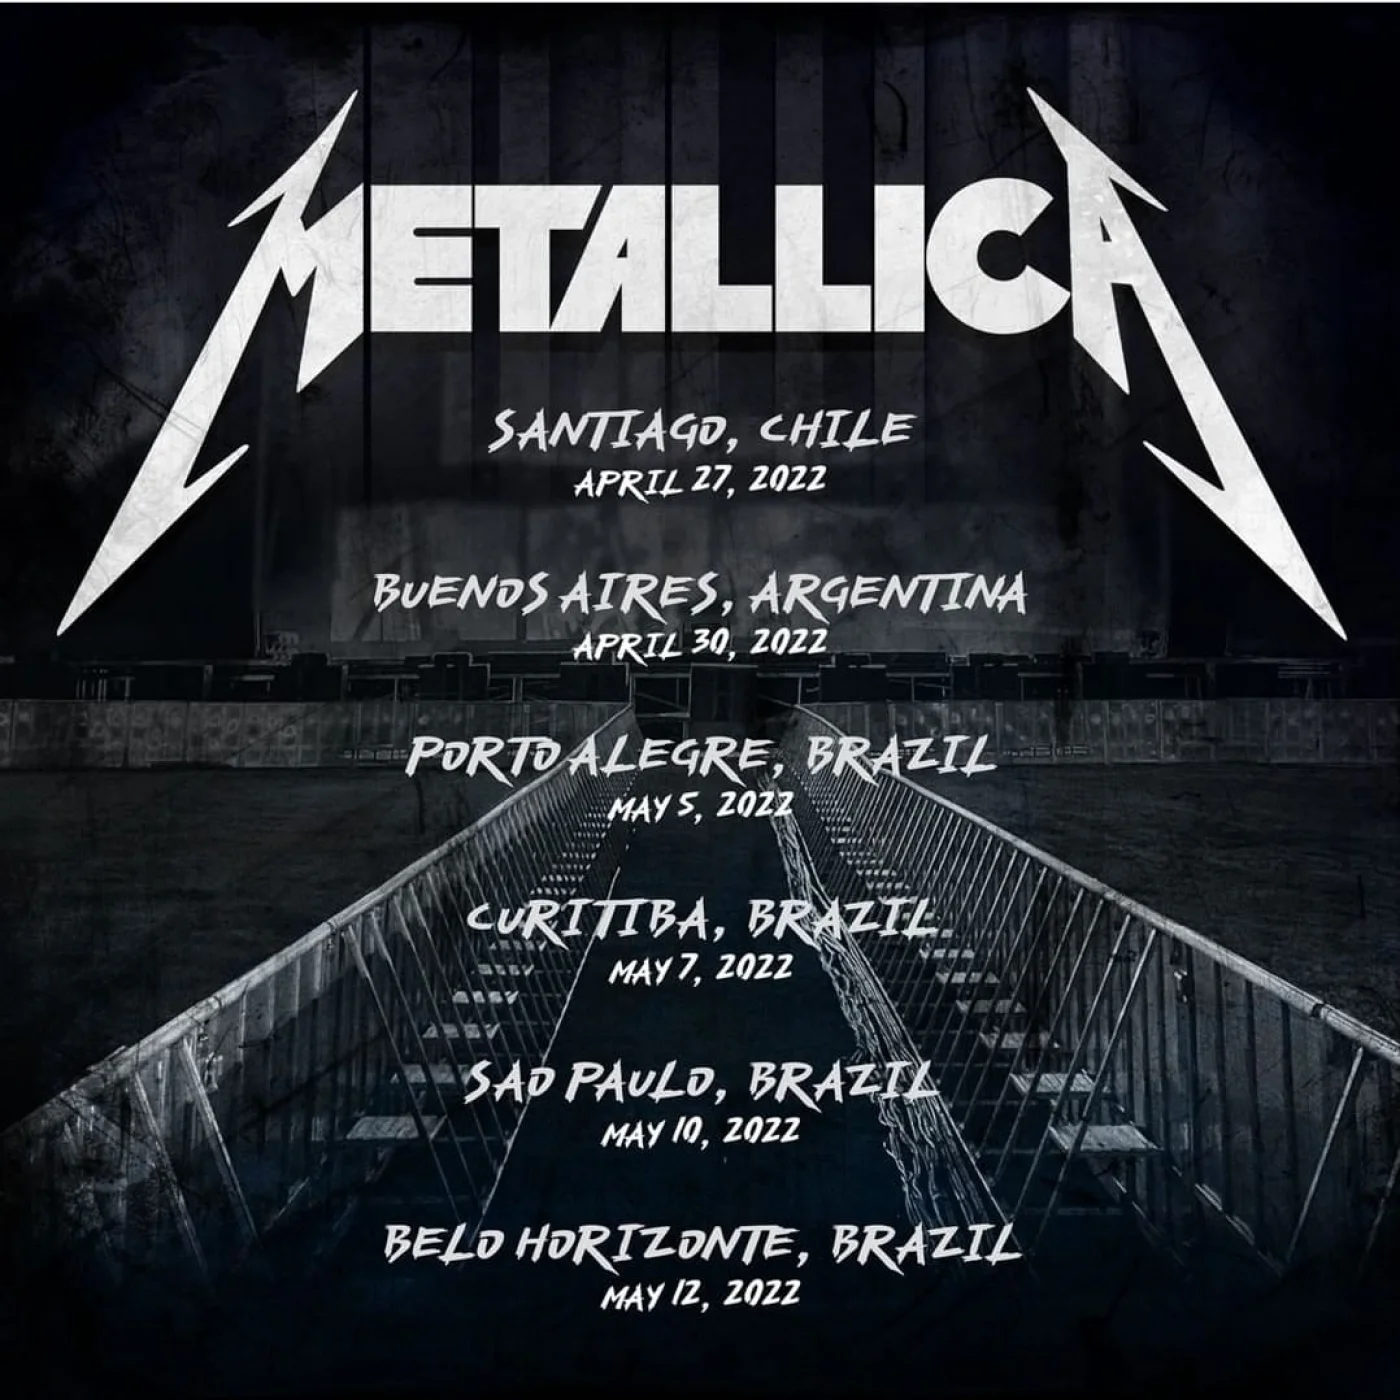 Metallica remarca datas de turn no Brasil para maio de 2022